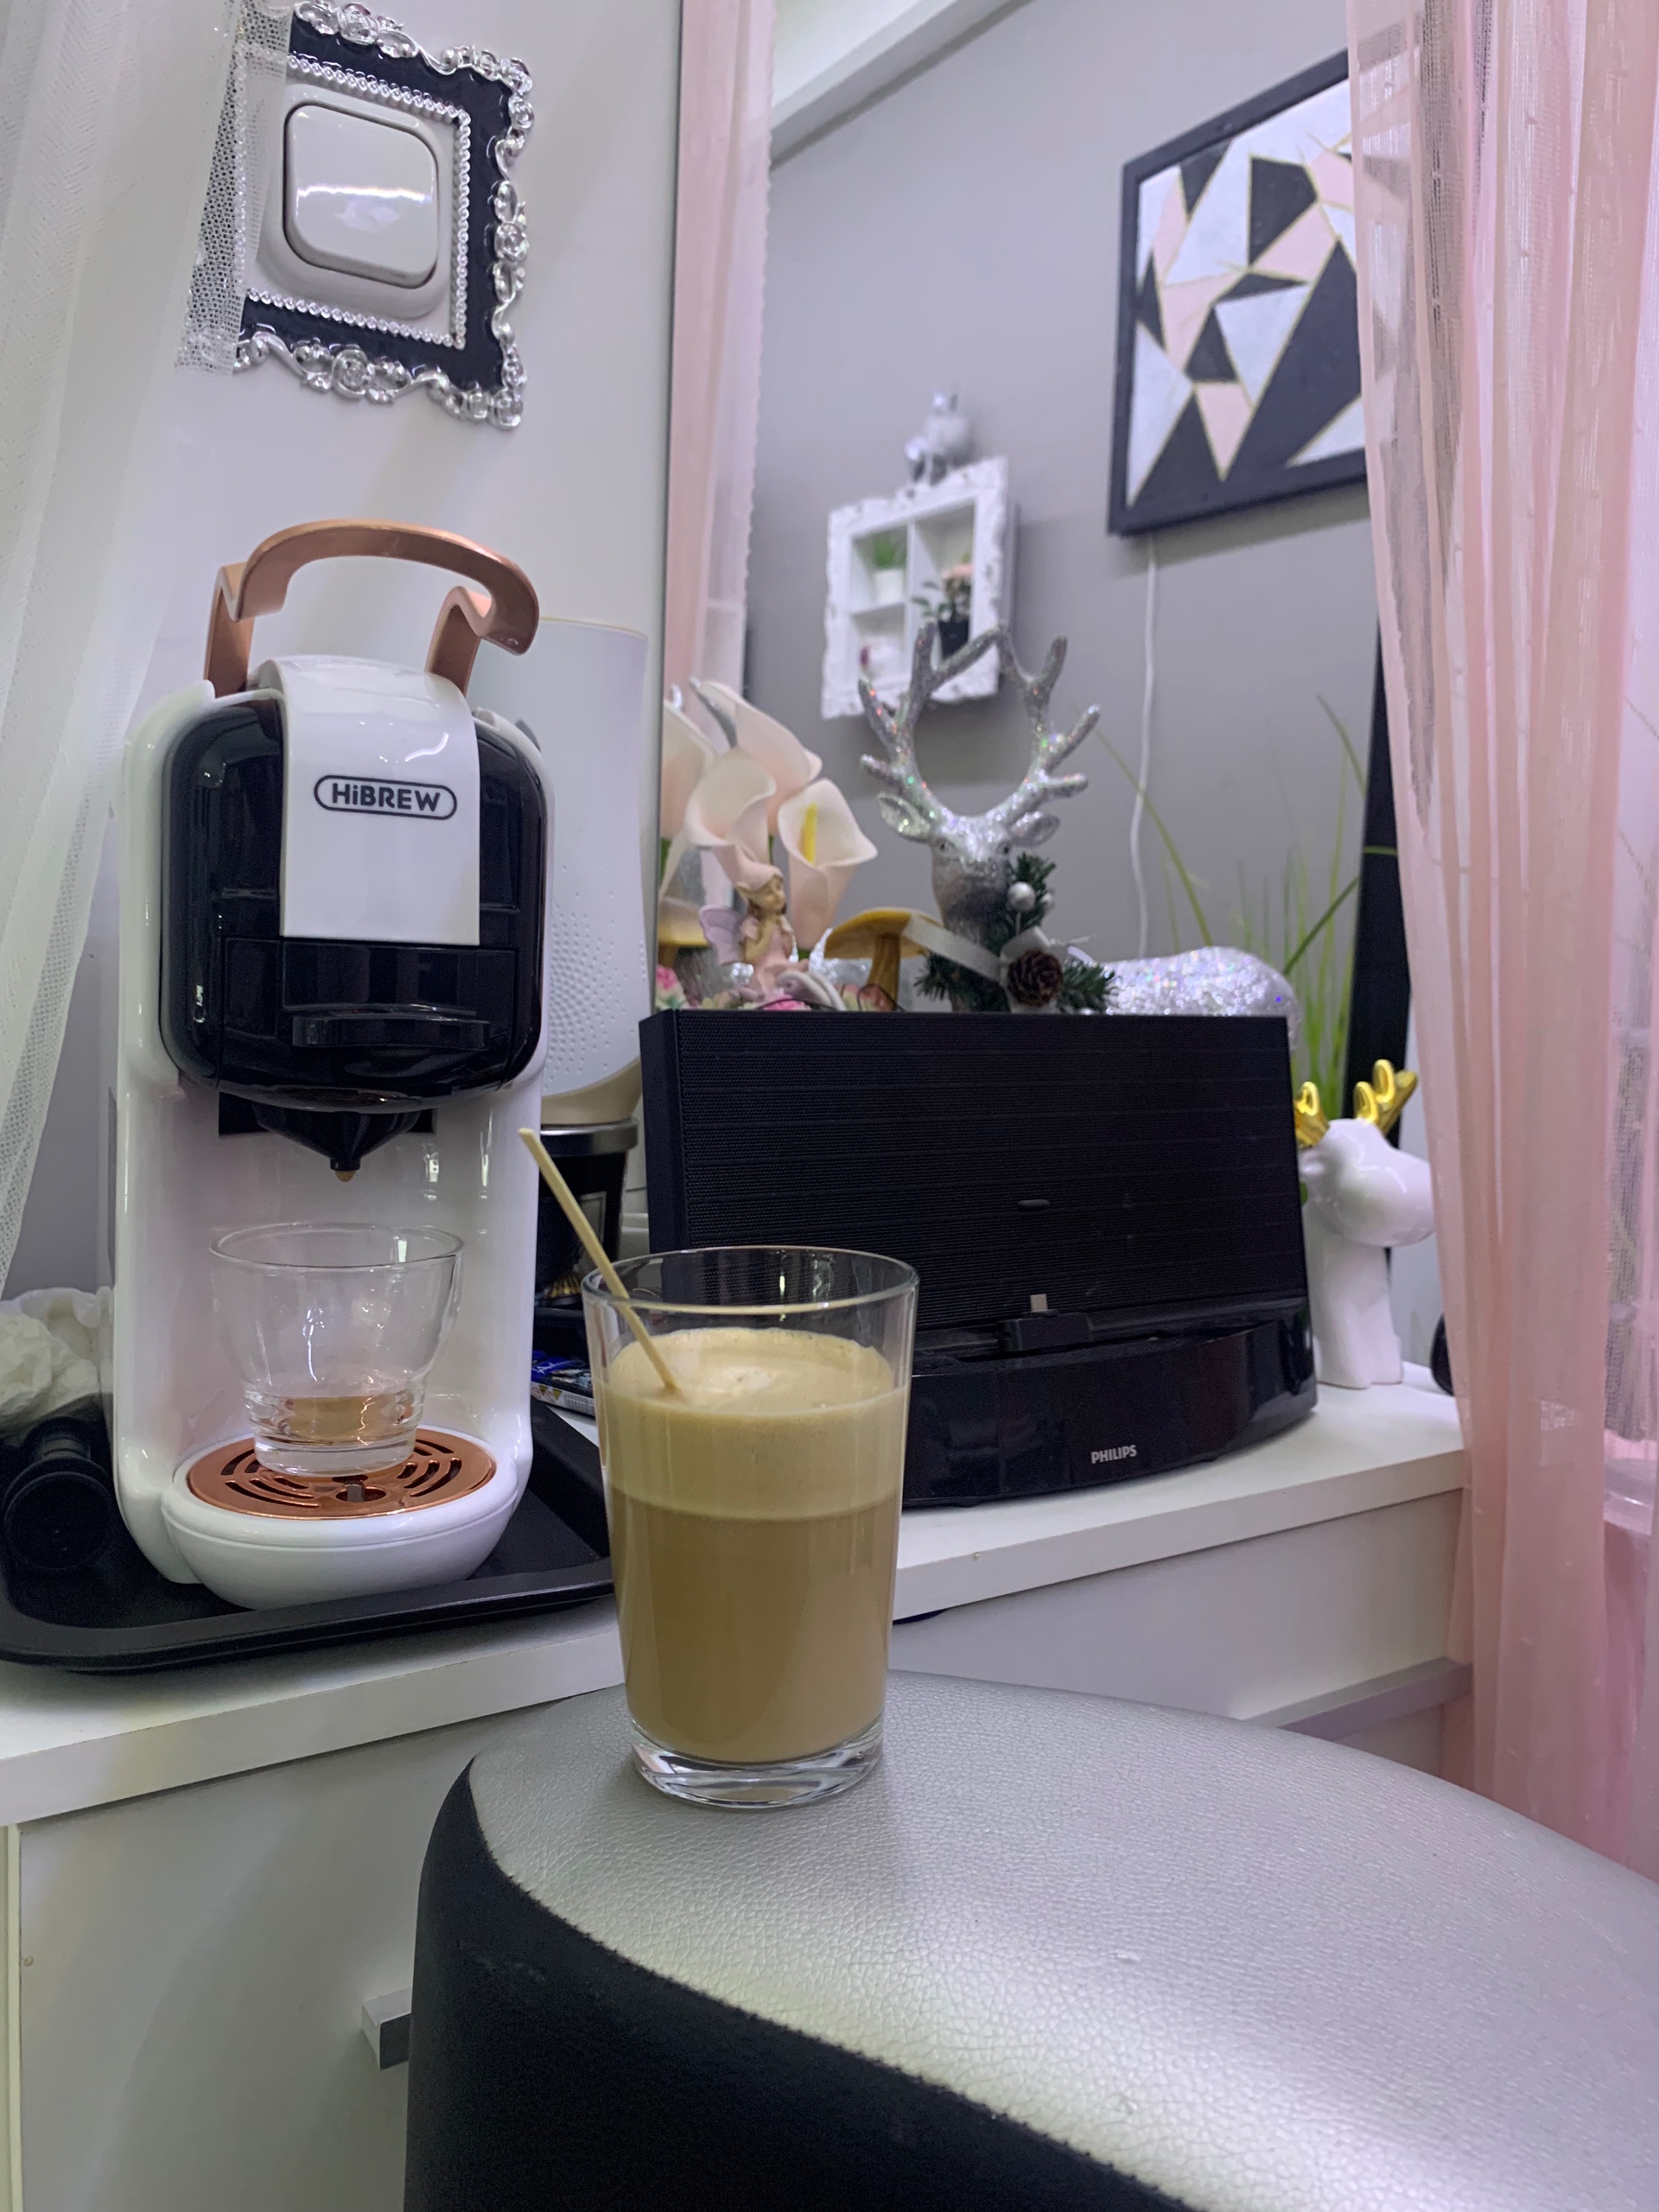 Machine à café à capsules 5 en 1 HiBREW H2B - Blanche 